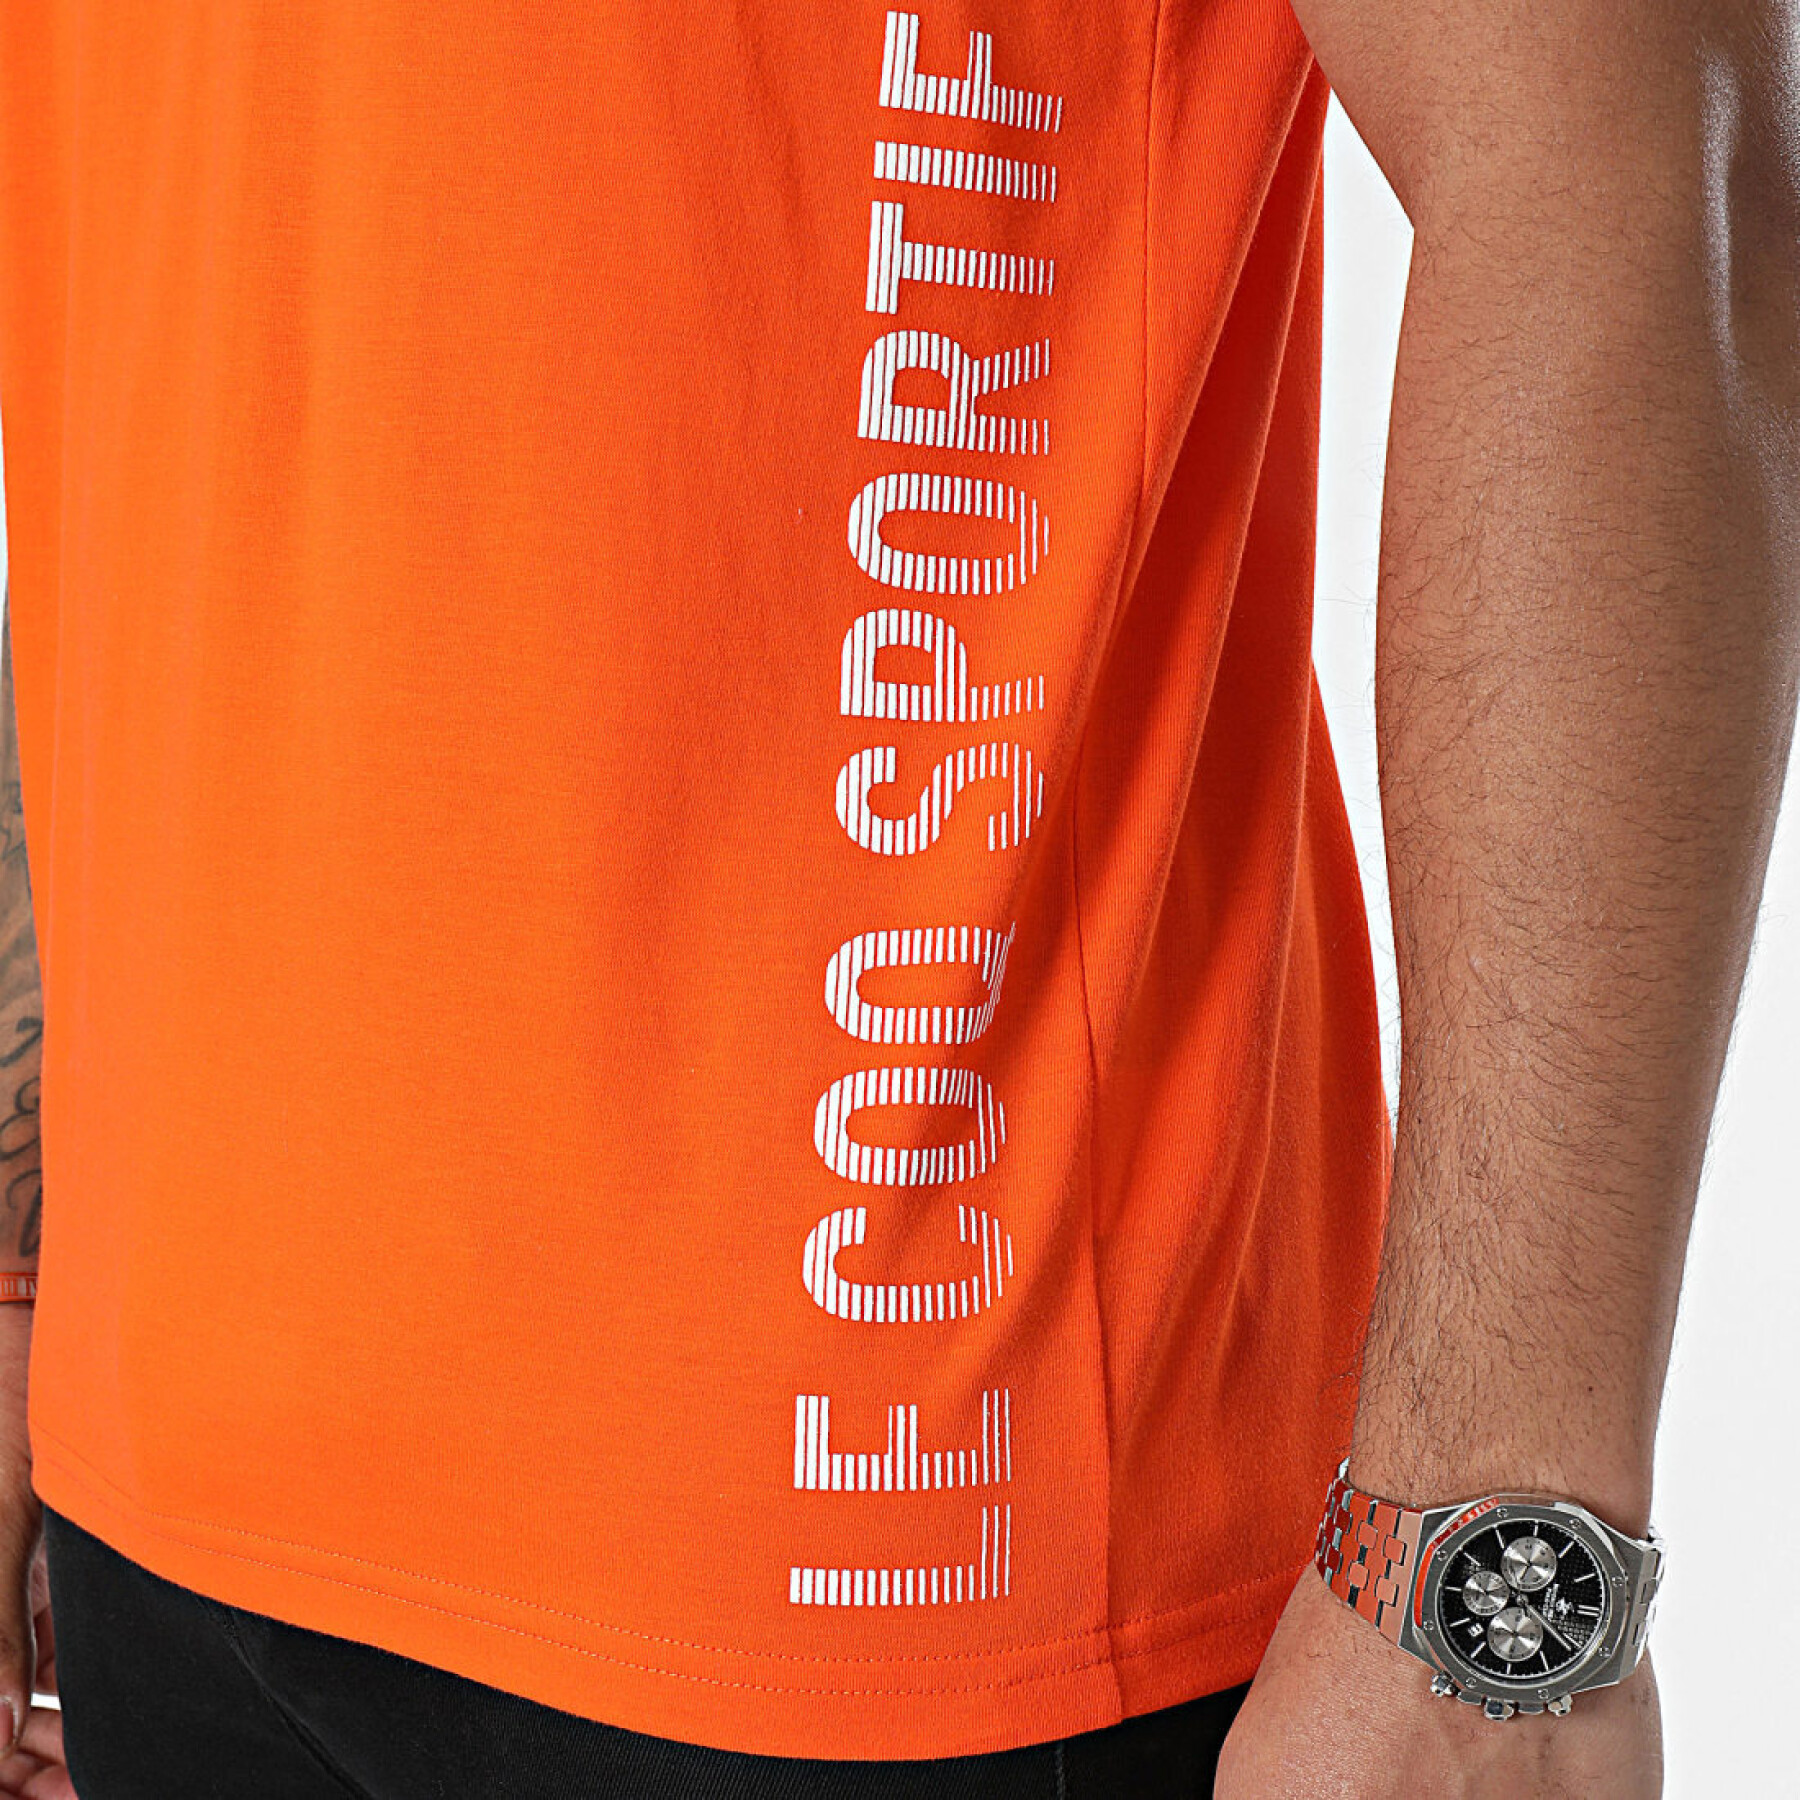 Camiseta Le Coq Sportif Bat N°2